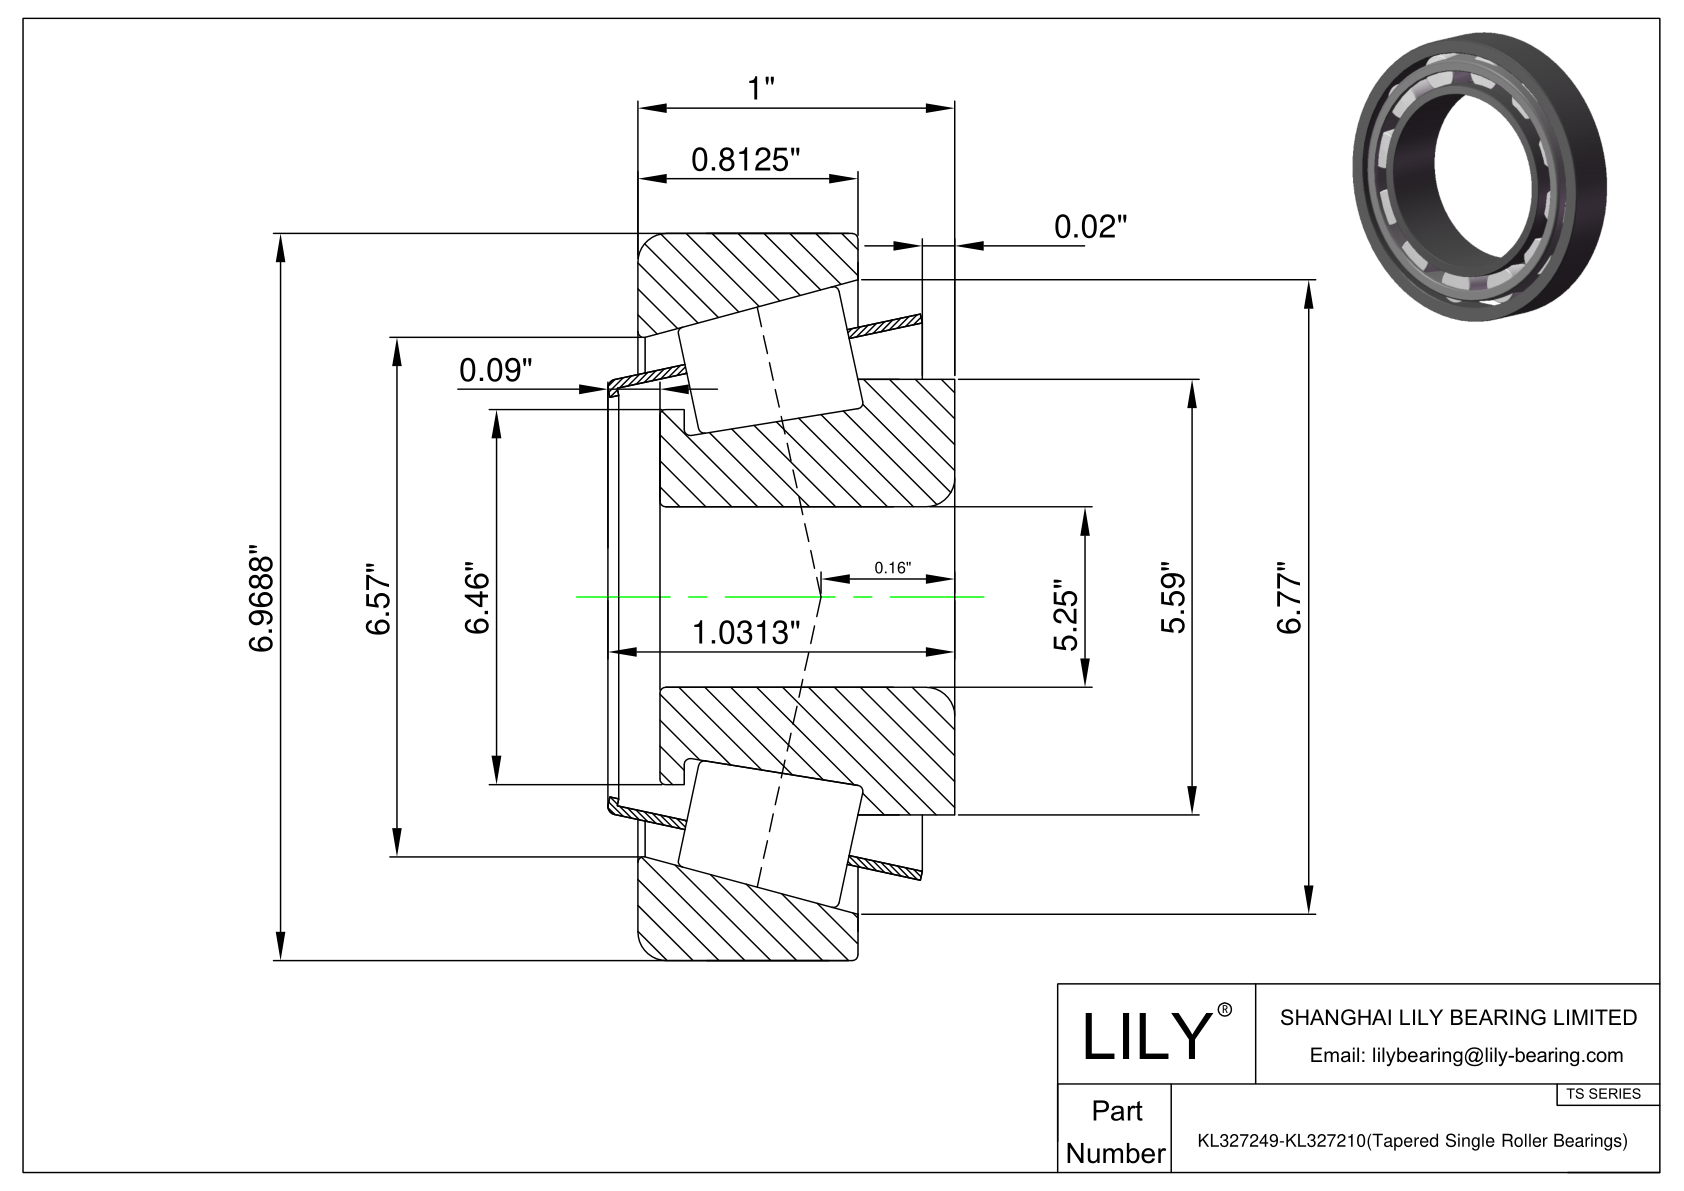 KL327249-KL327210 TS系列(圆锥单滚子轴承)(英制) CAD图形